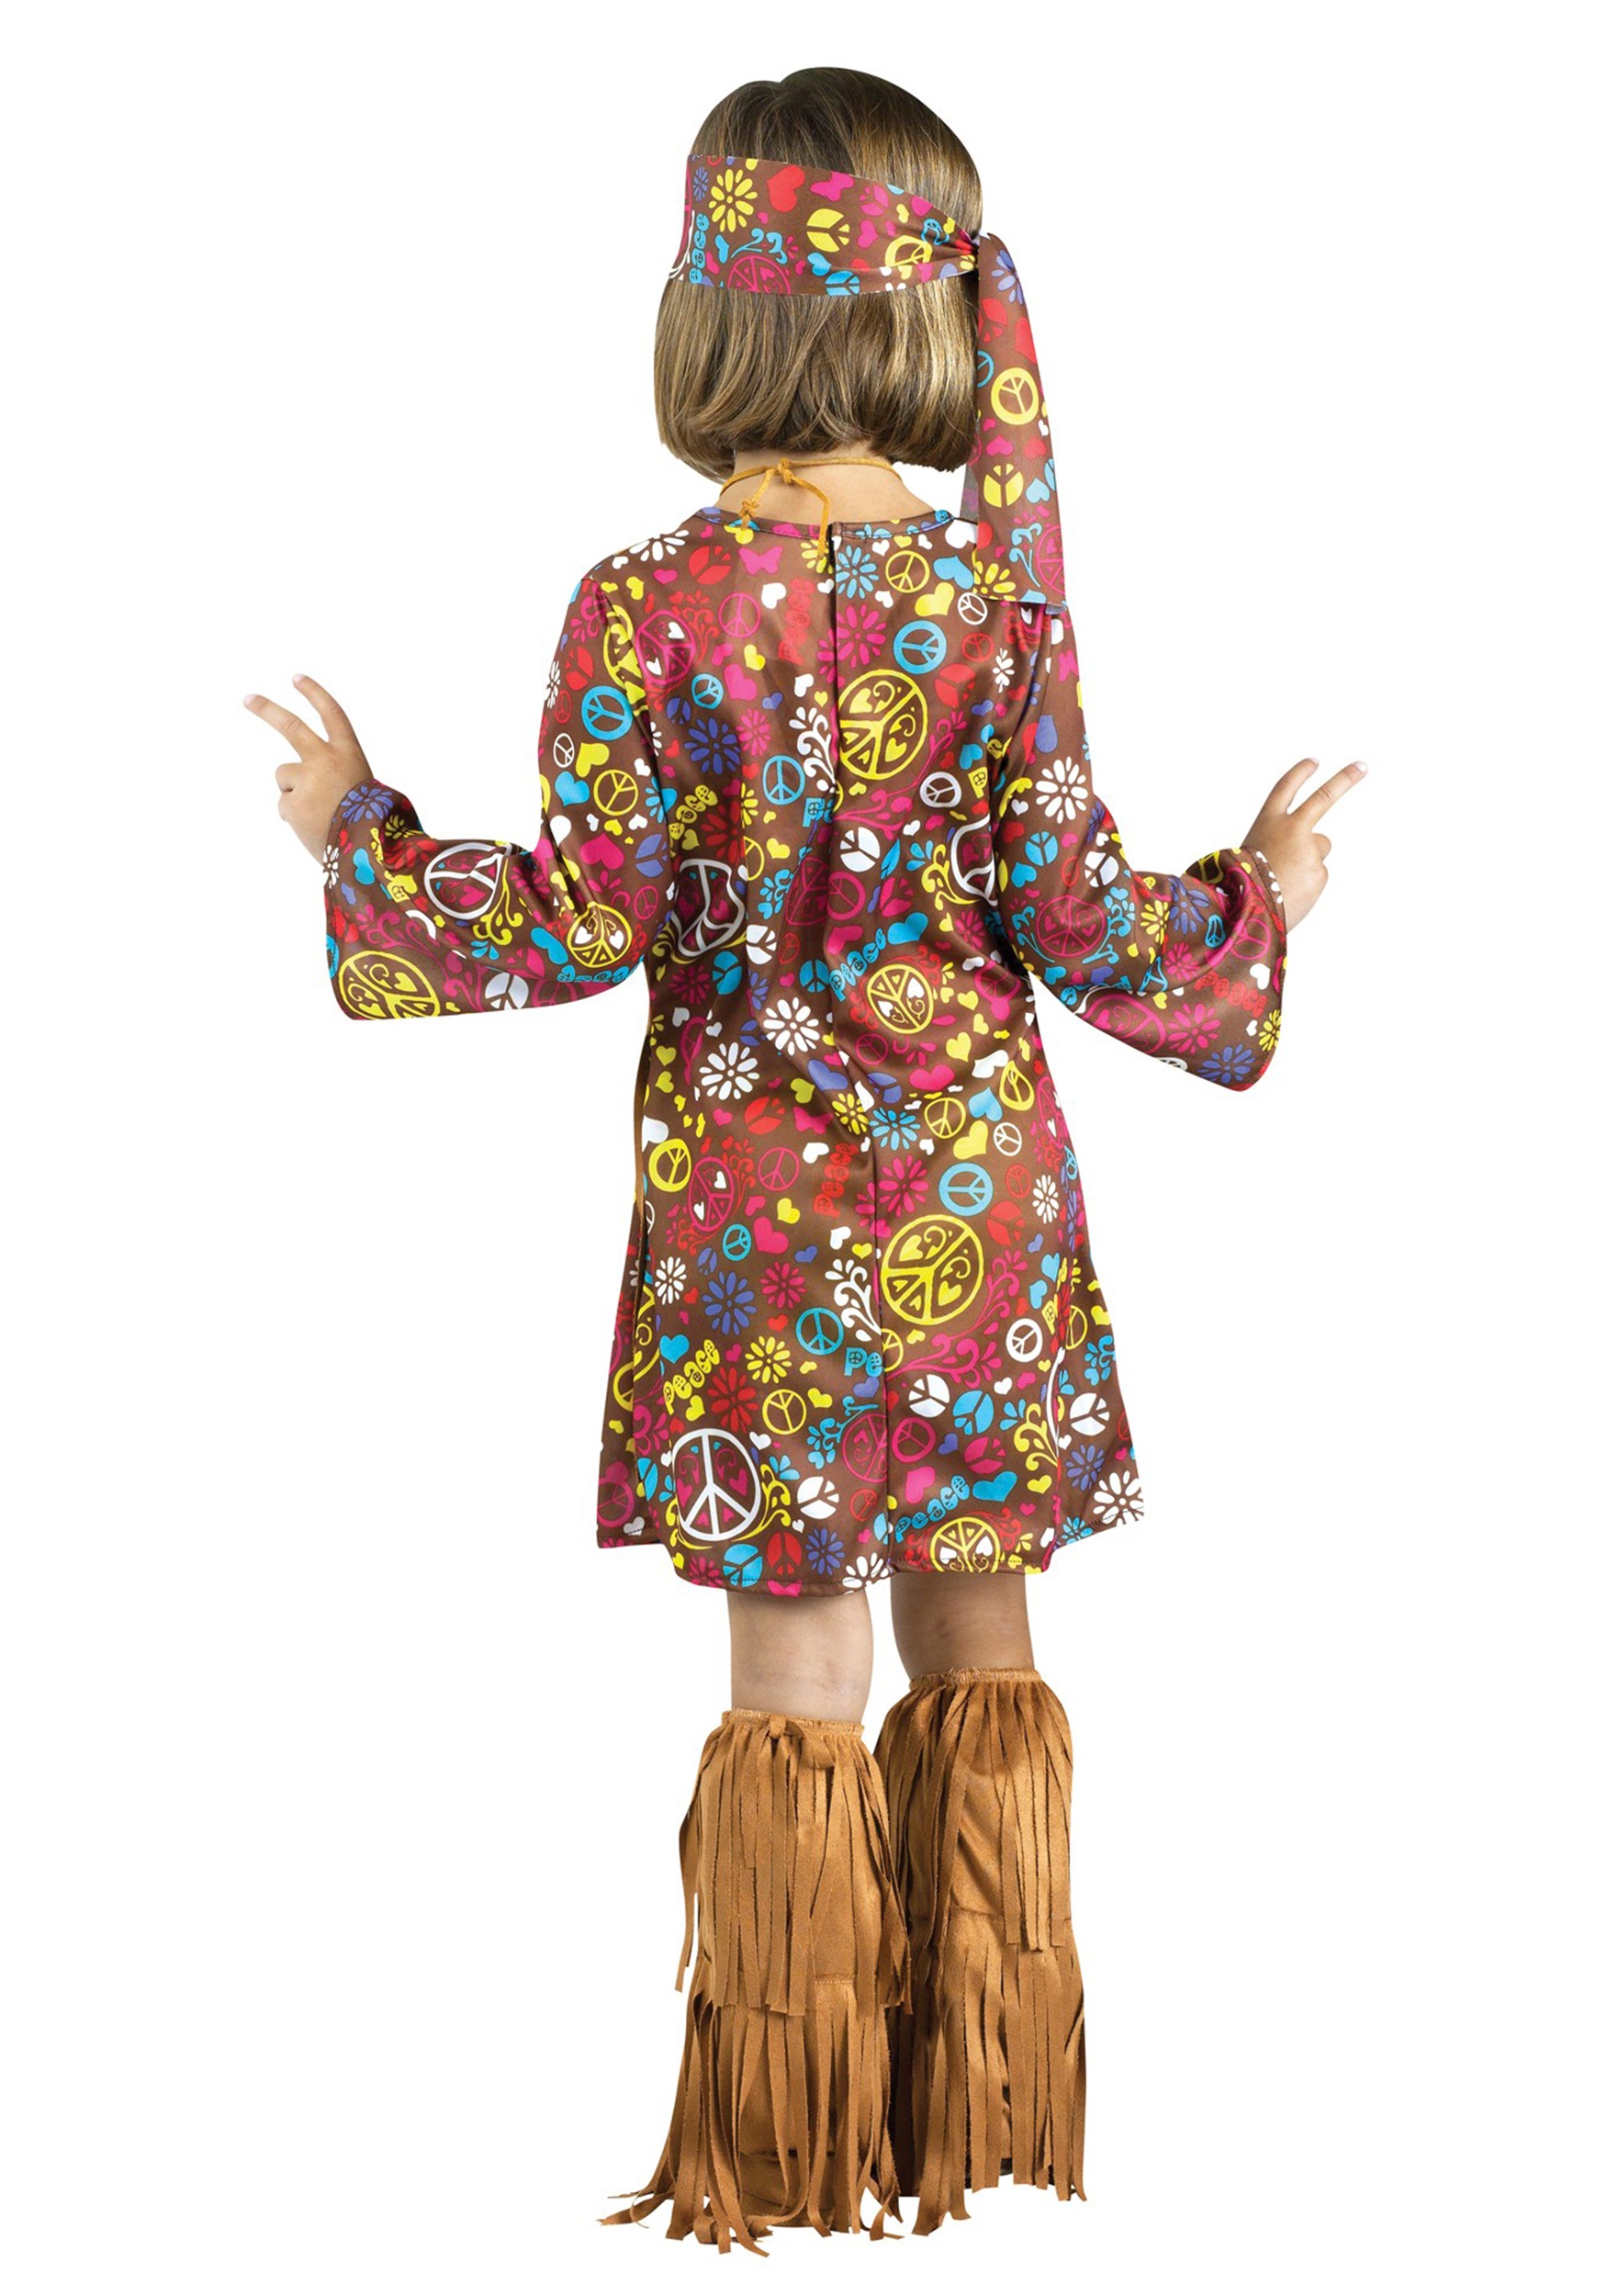 Toddler Peace & Love Hippie Costume Dress